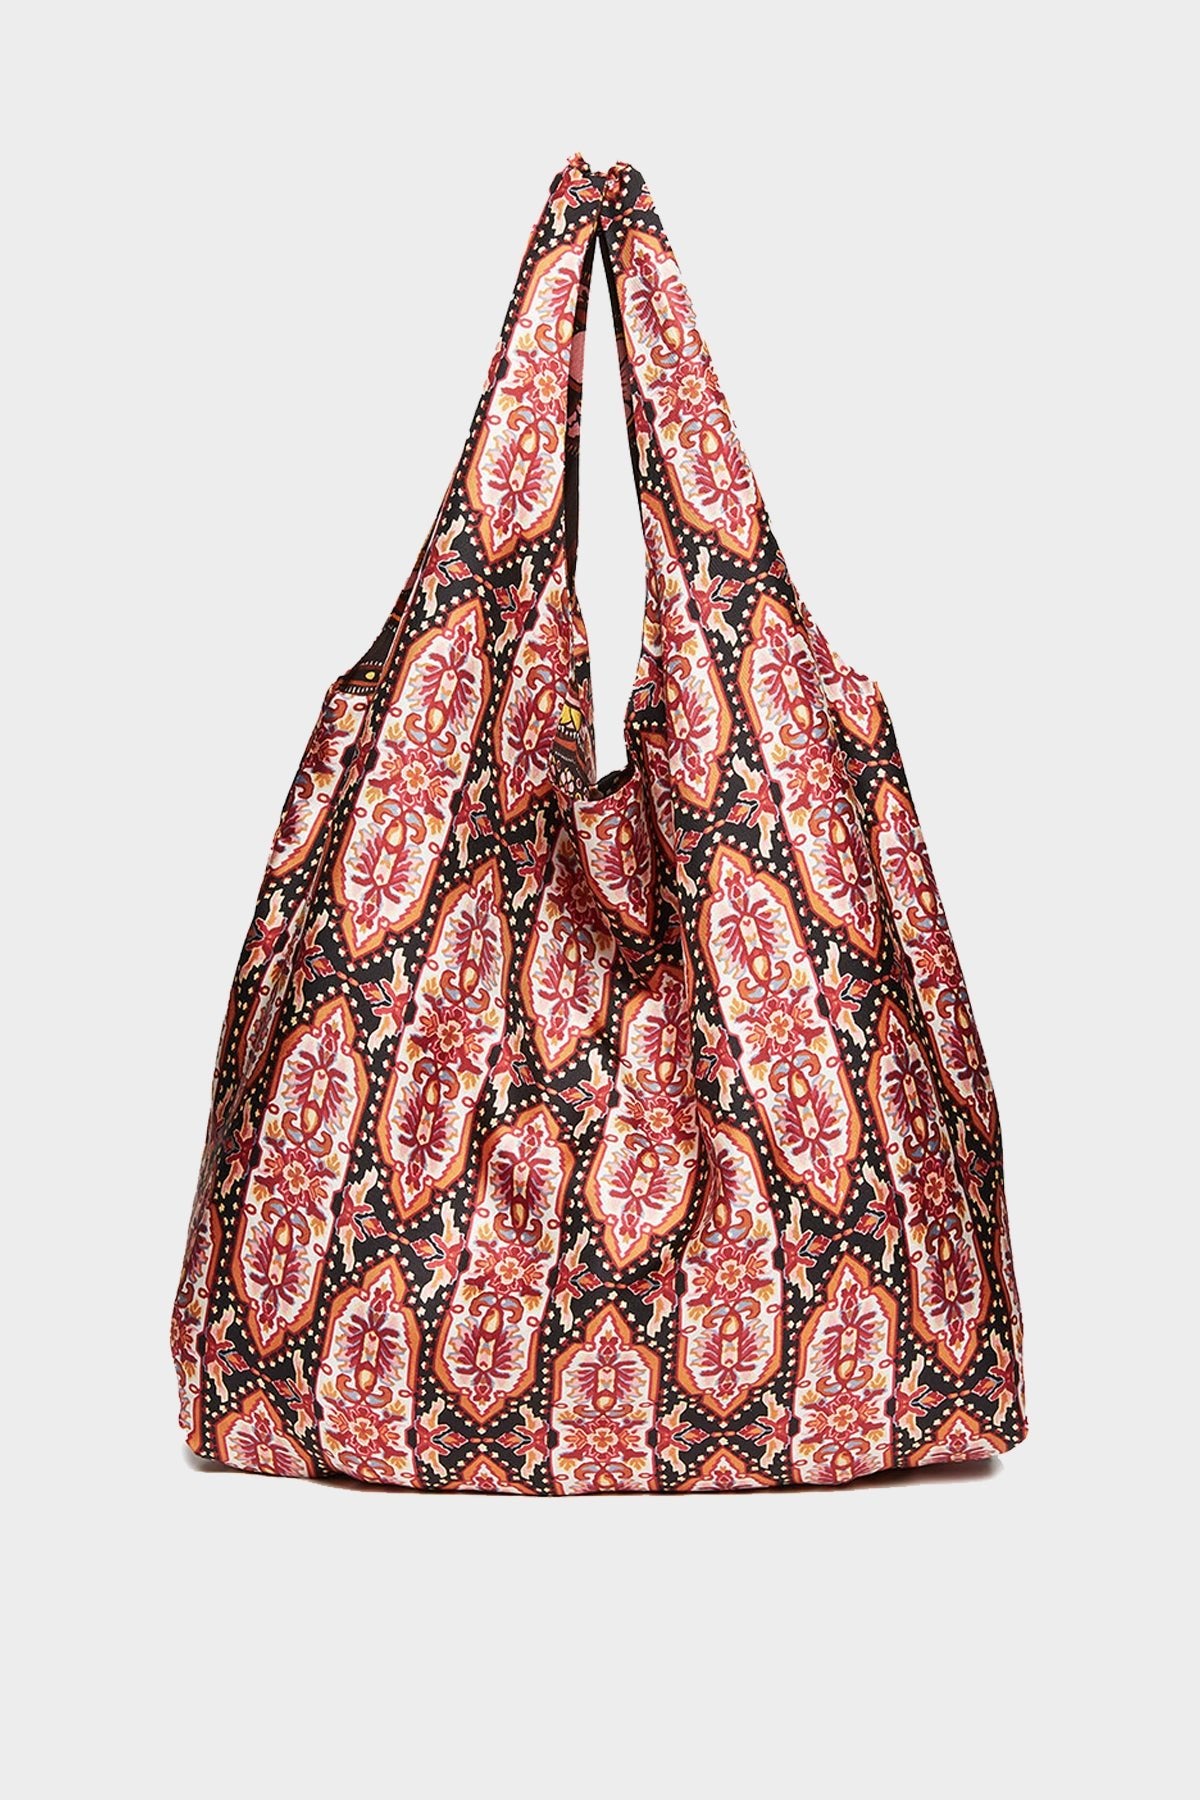 Shopping Bag in Tapestry - shop-olivia.com